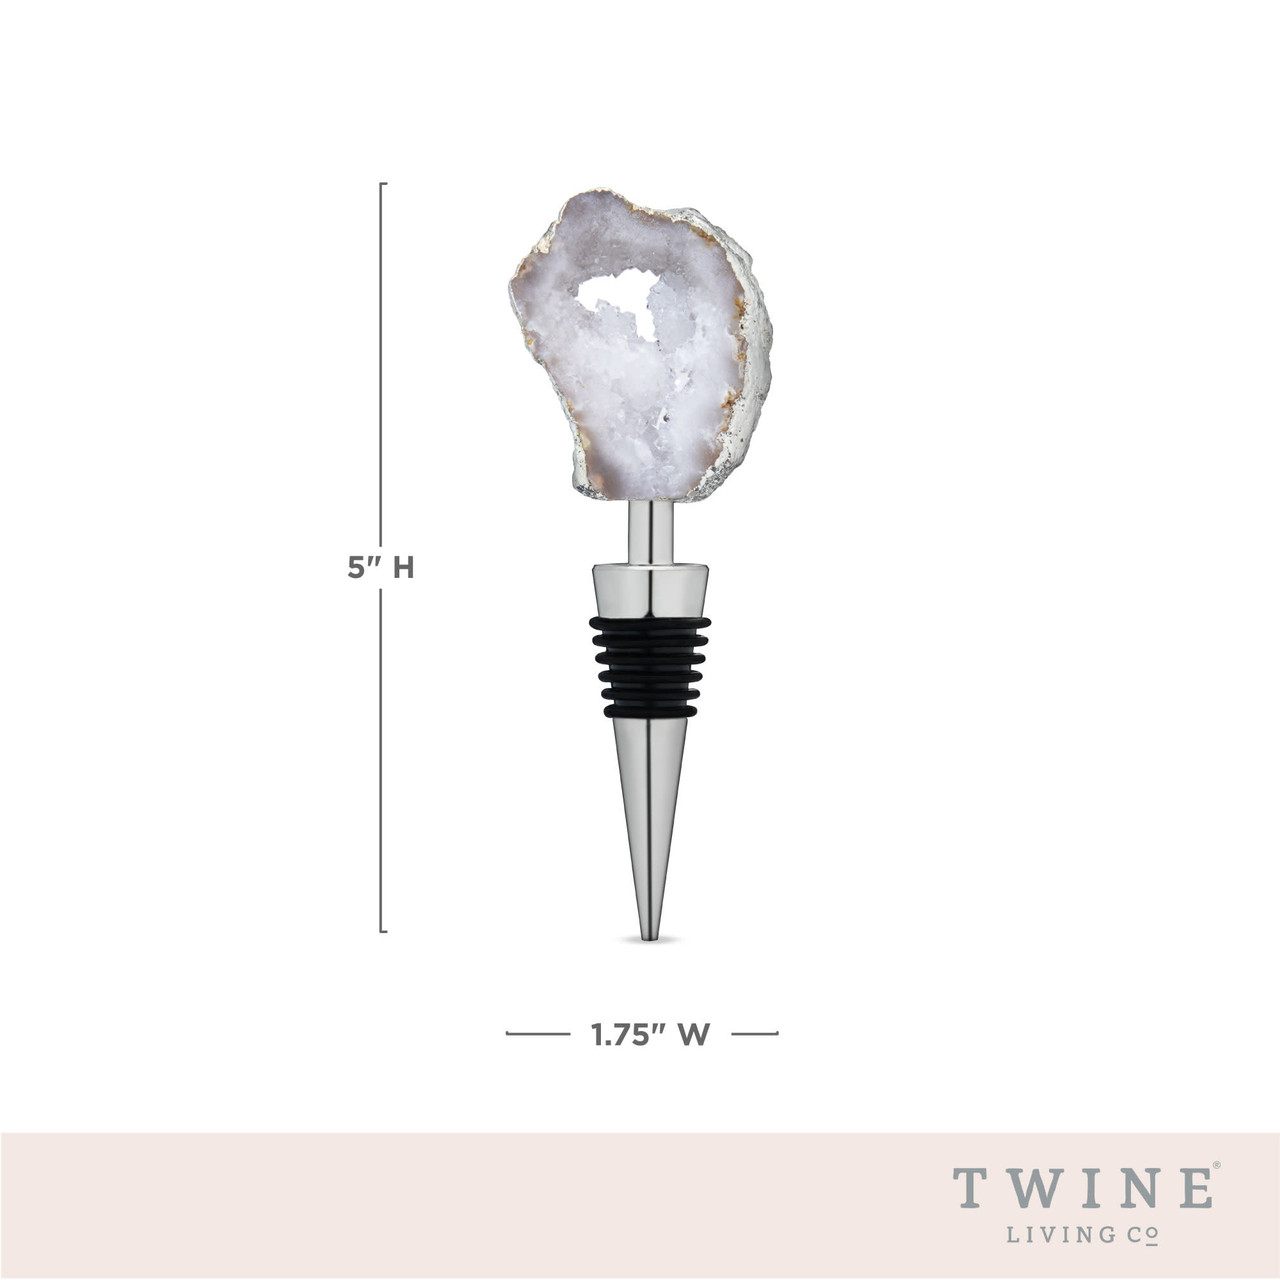 White Geode Bottle Stopper by Twine®